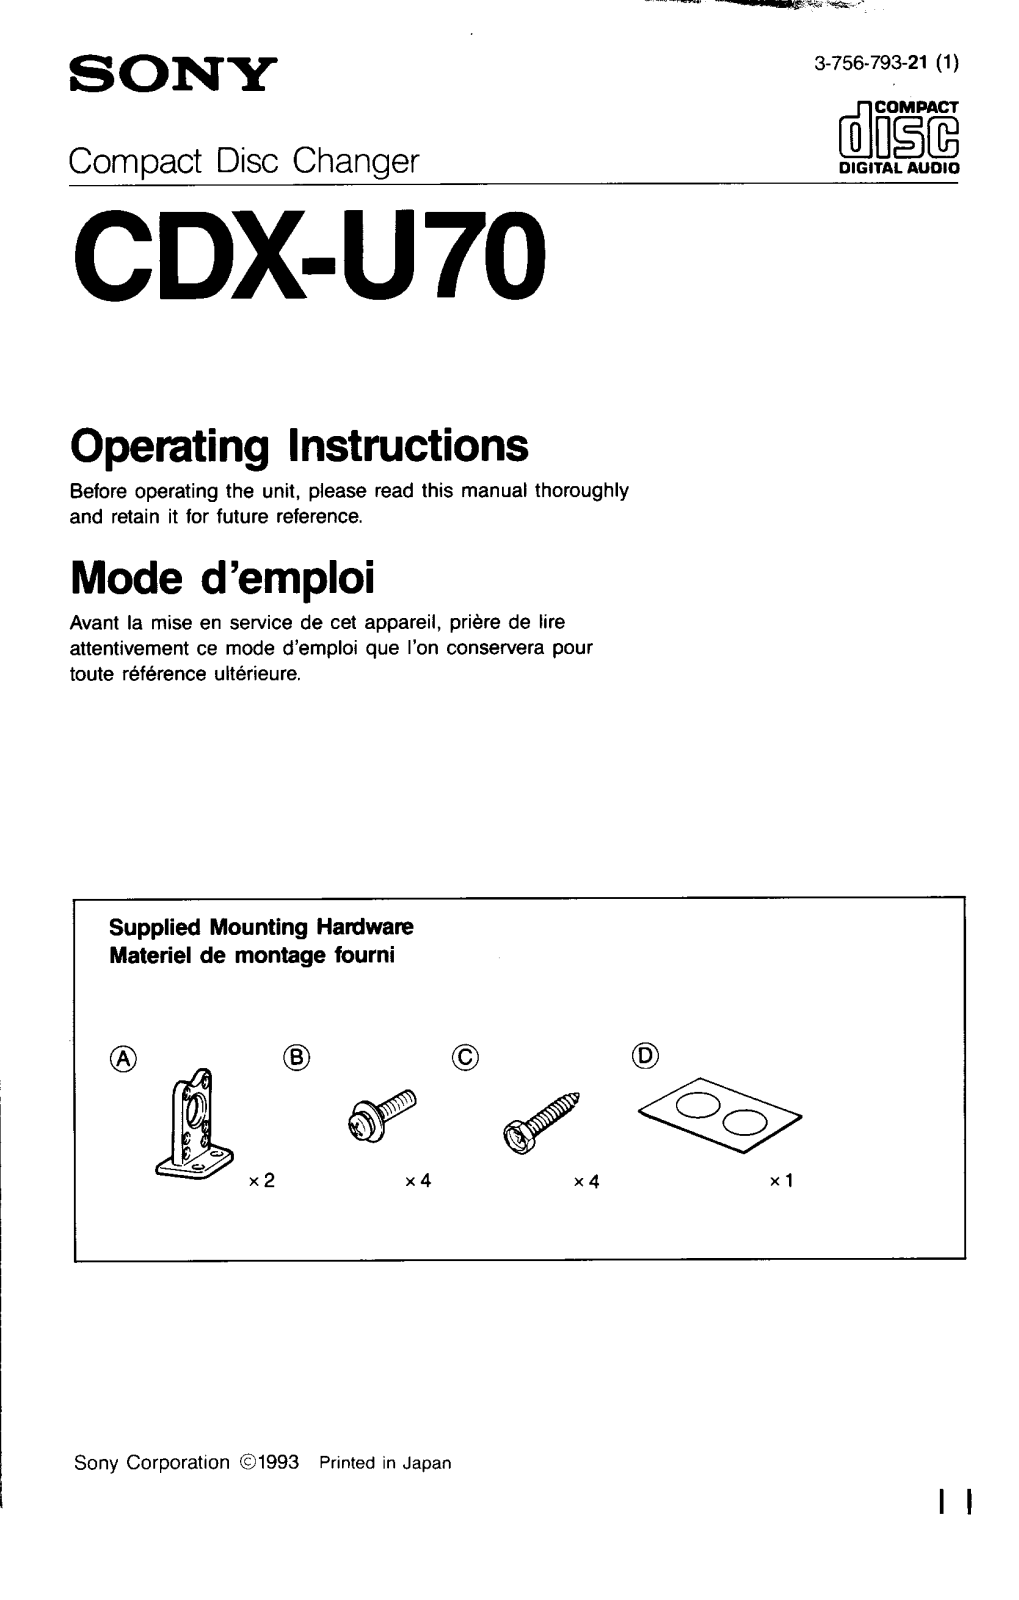 Sony CD-XU70 User Manual